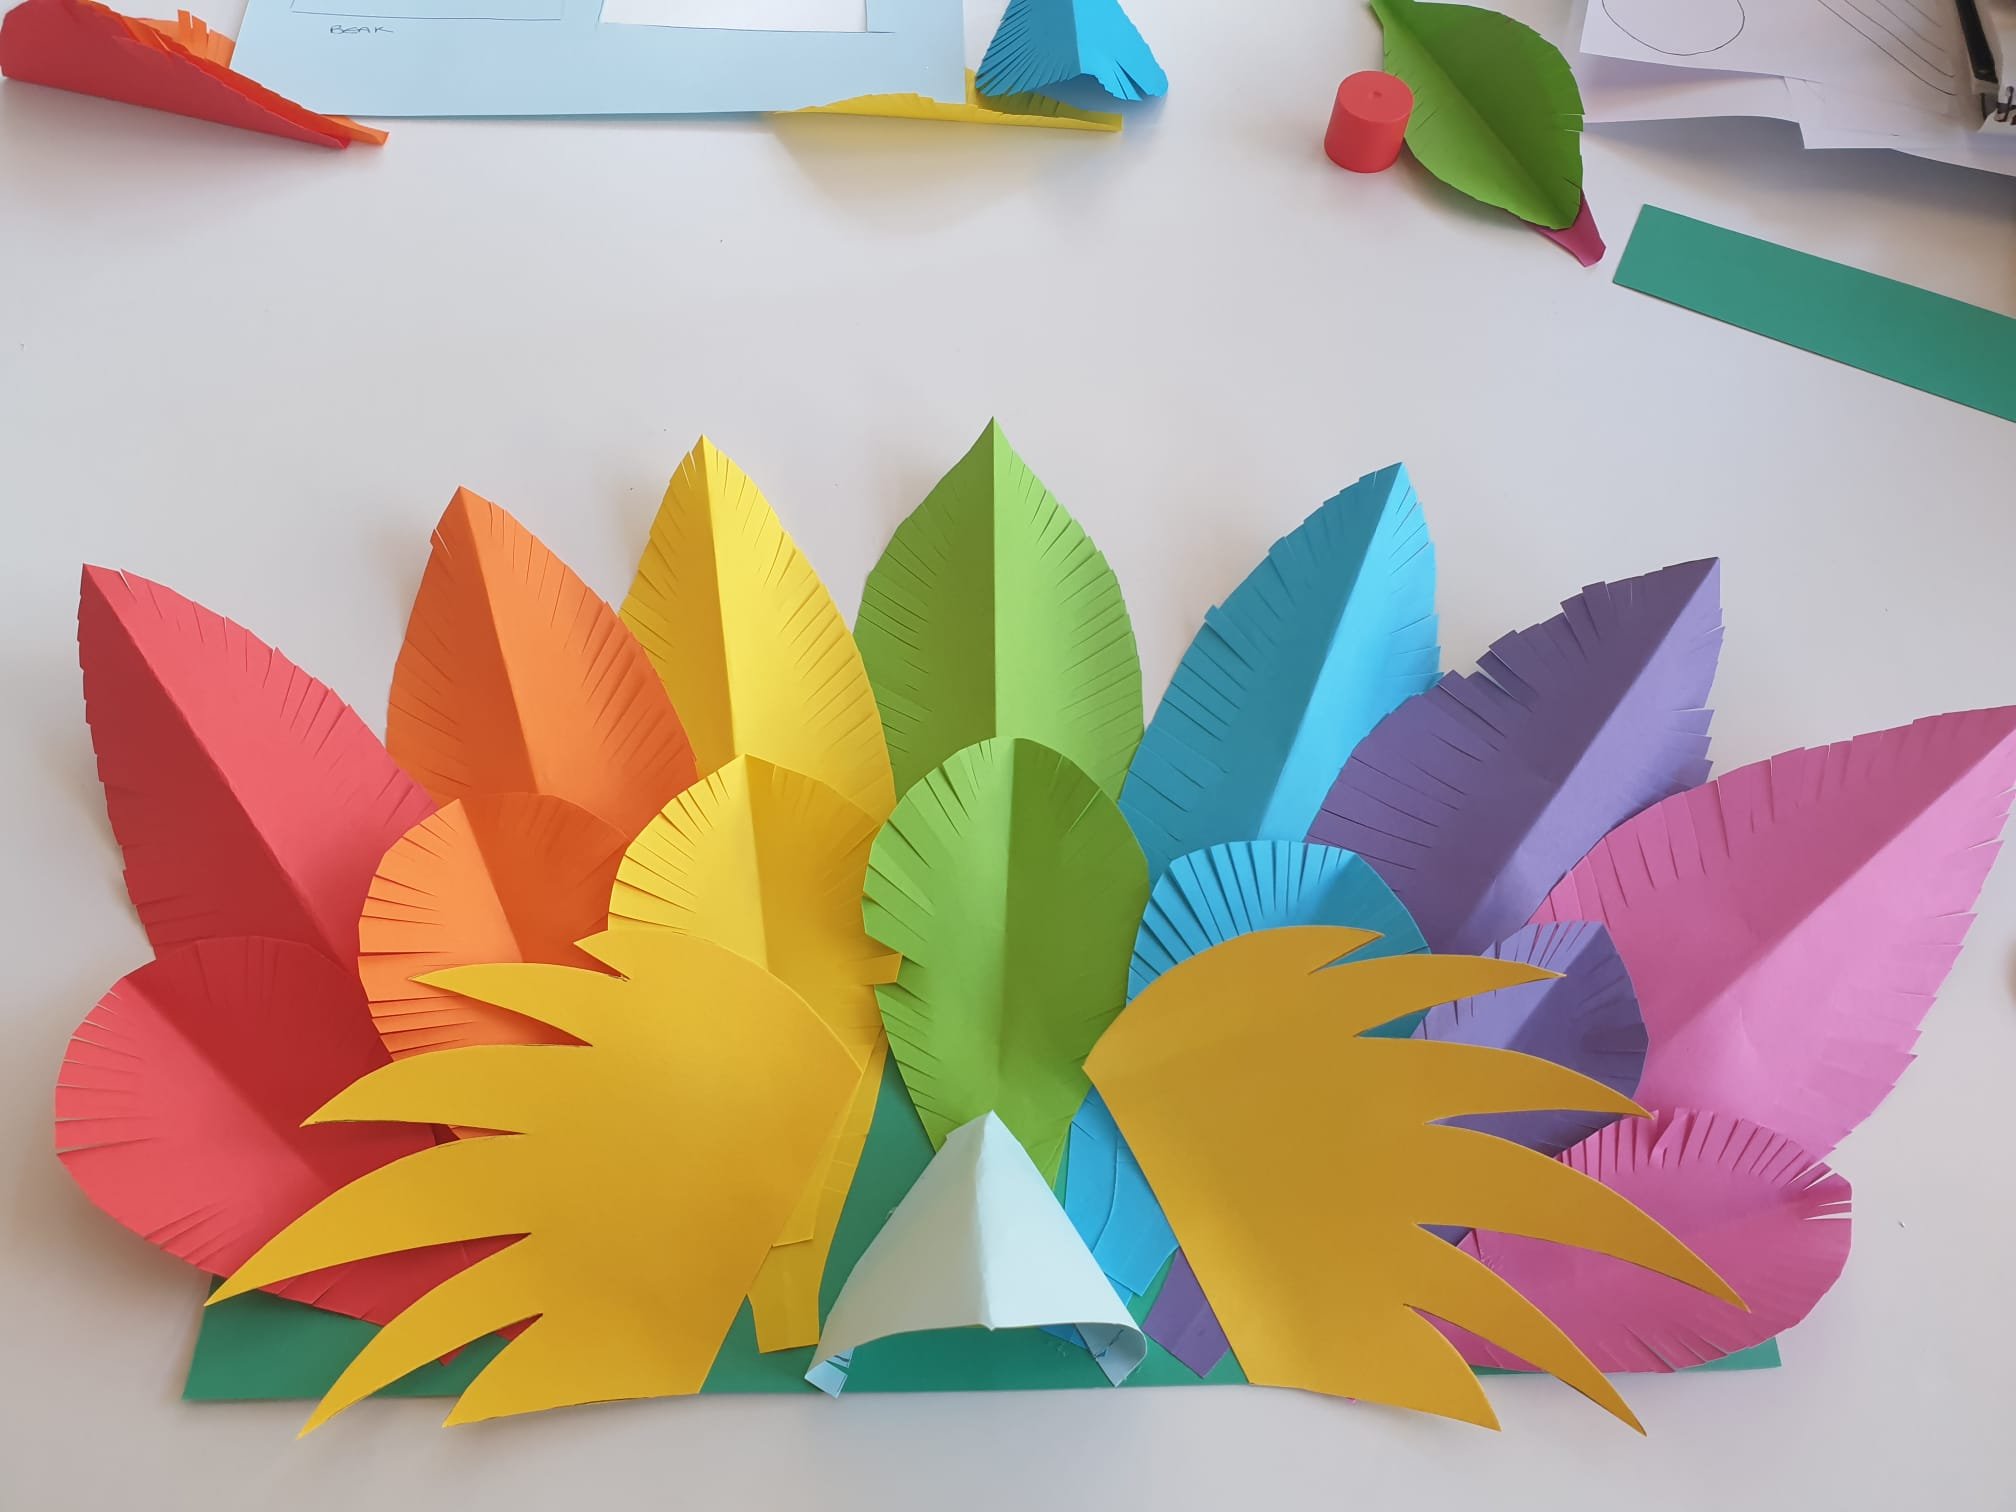 Feathers stuck to the side of the beak on the rainbow bird carnival headdress